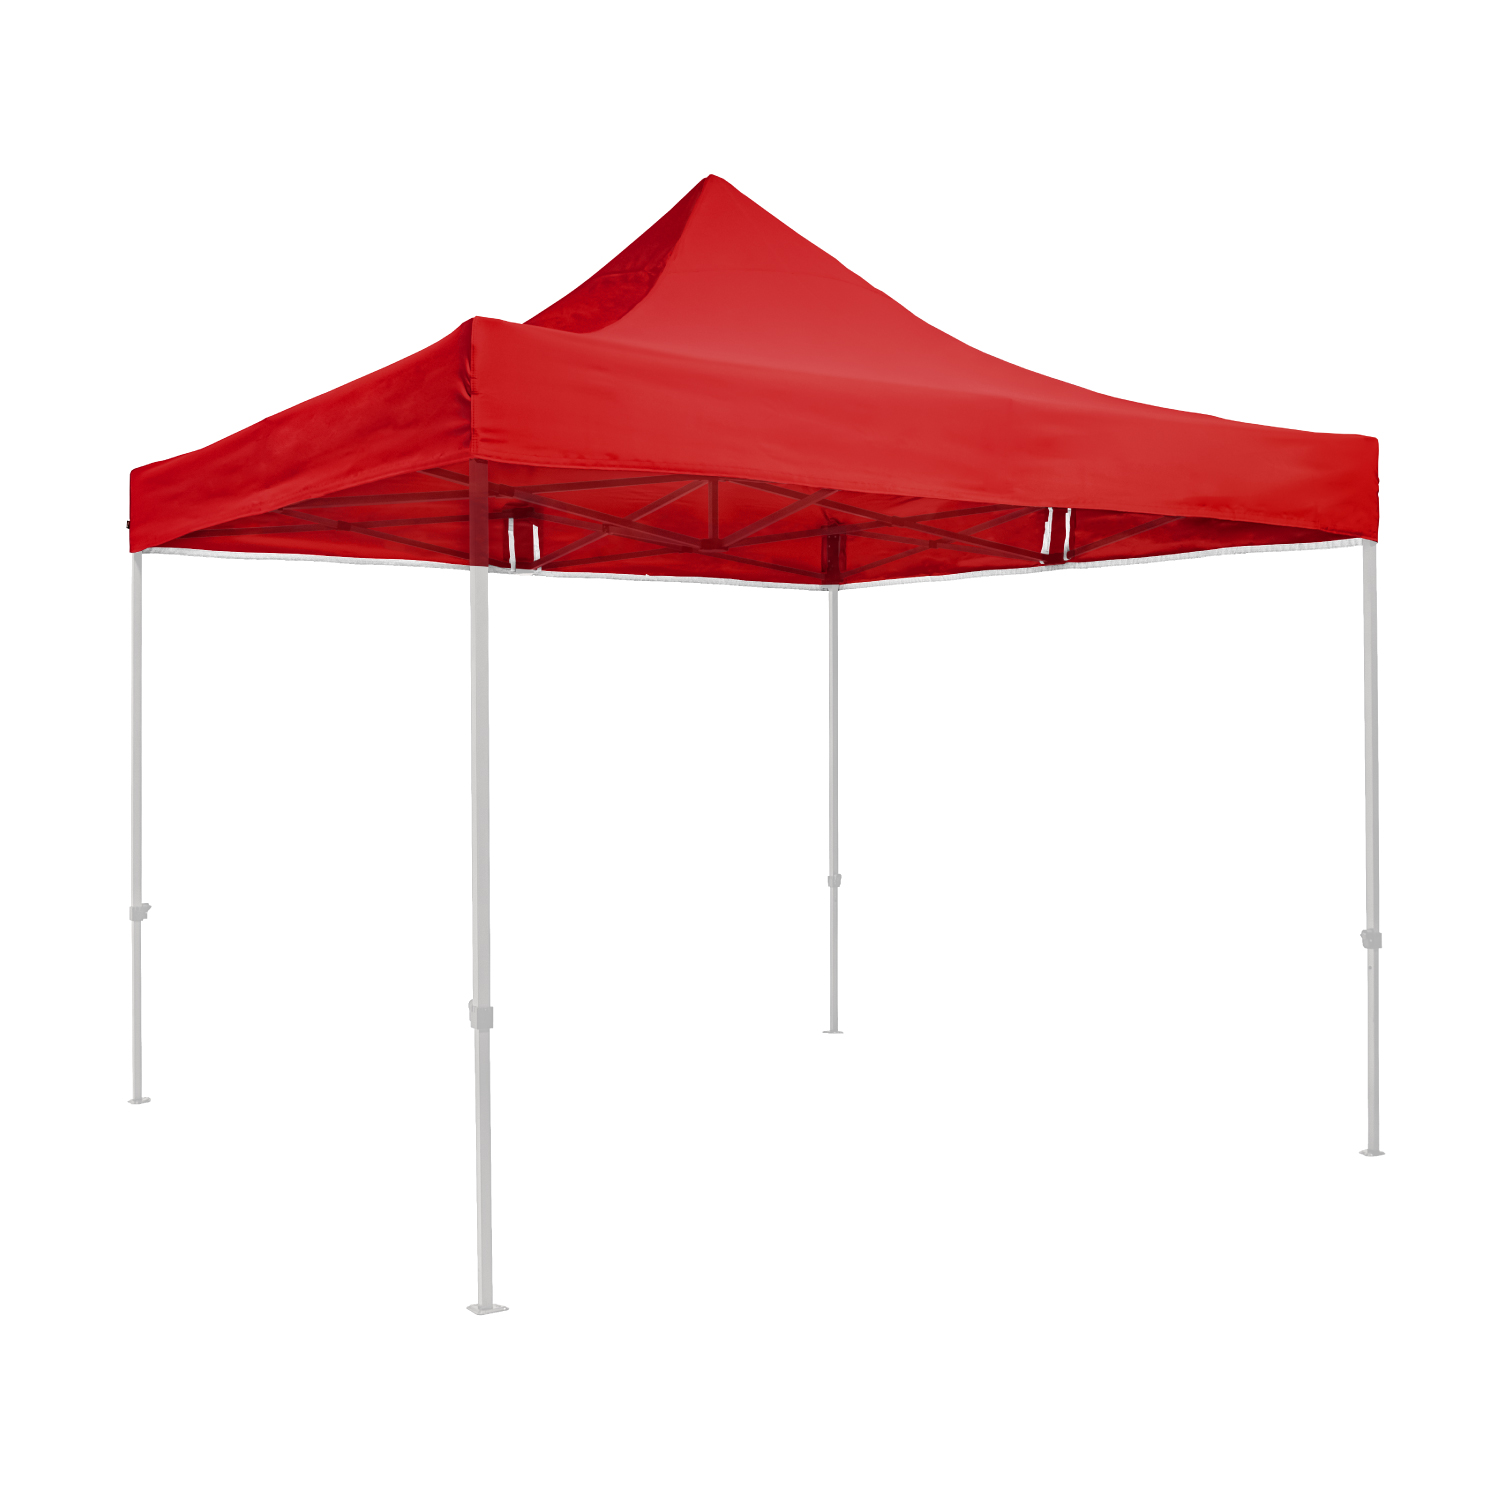 Tecto Tenda Standard 800D 3×3 Vermelho